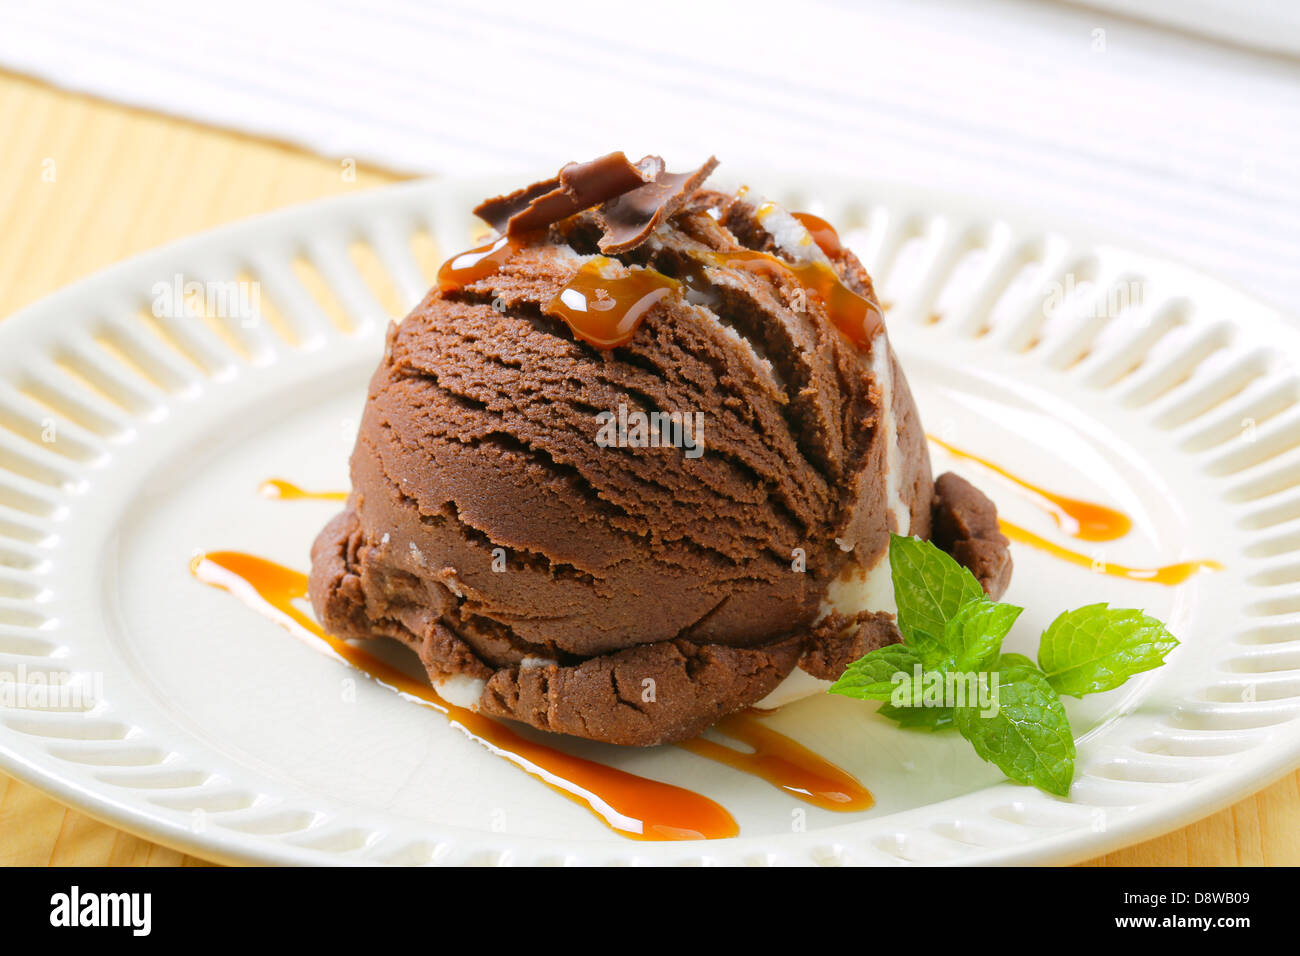 https://c8.alamy.com/comp/D8WB09/chocolate-vanilla-ice-cream-with-caramel-sauce-D8WB09.jpg